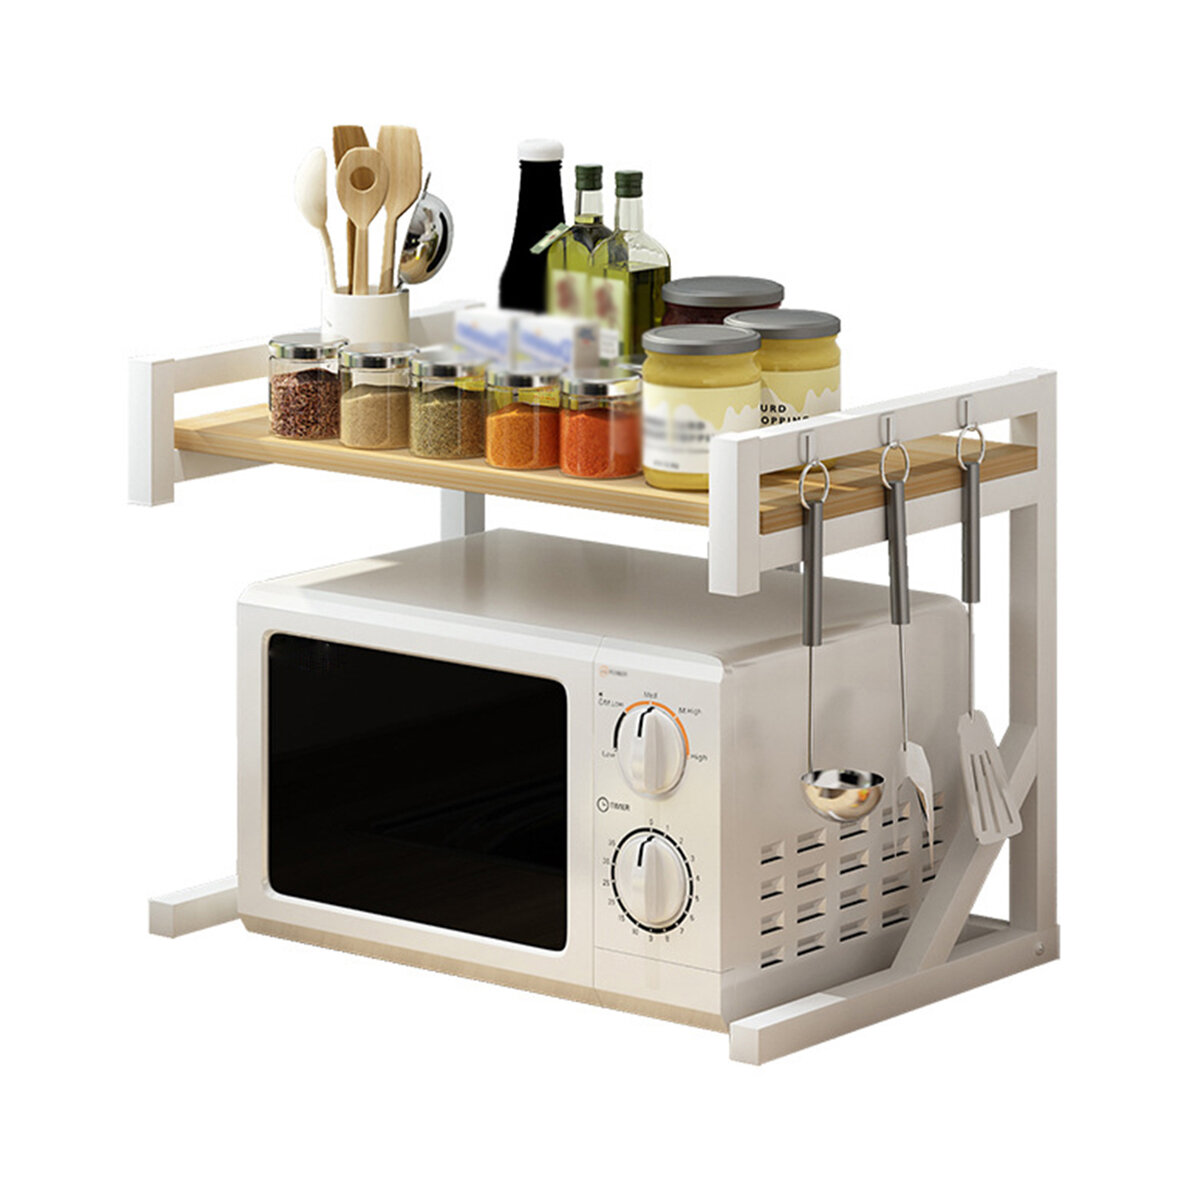 2 Tiers Microwave Oven Rack Baker Stand Kitchen Storage Shelf Desktop Seasoning Flavoring Organizer